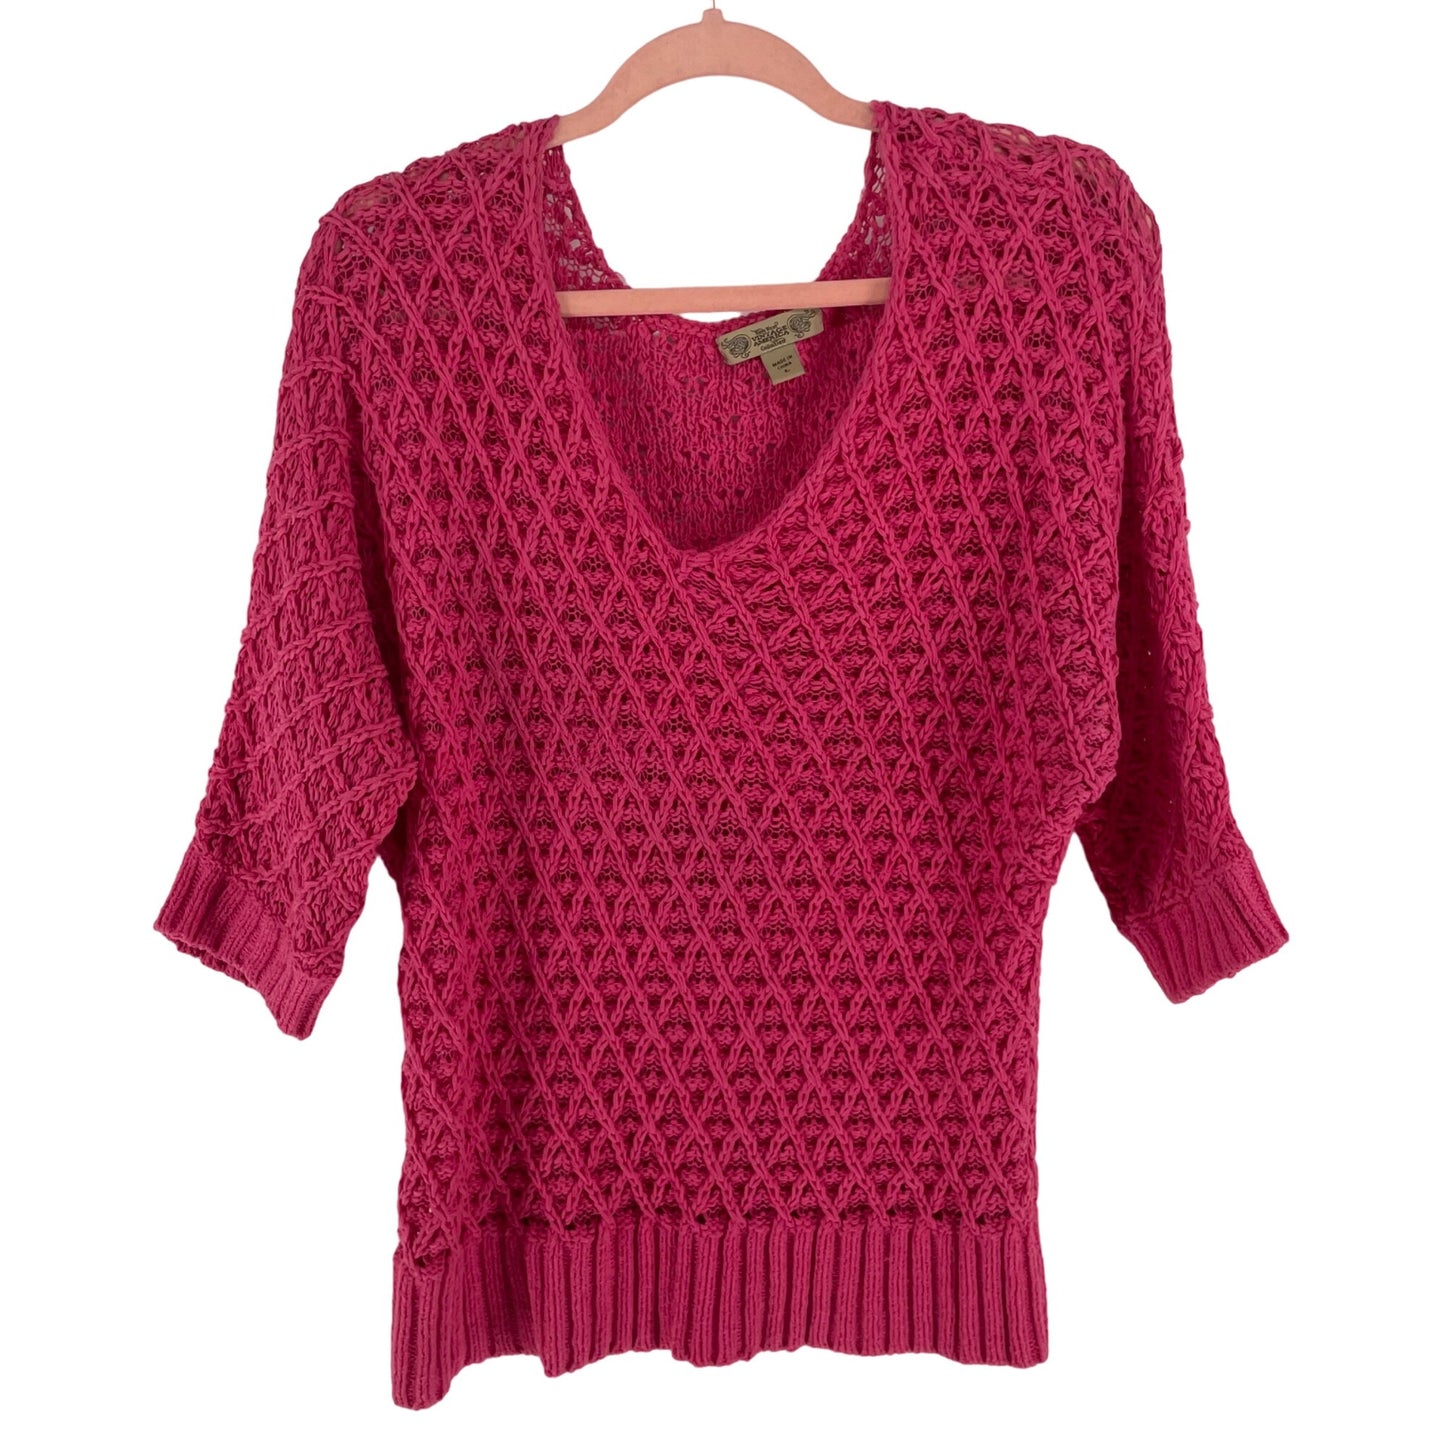 Nine West Women's Size L V-Neck Fuchsia Mesh Knit Sweater